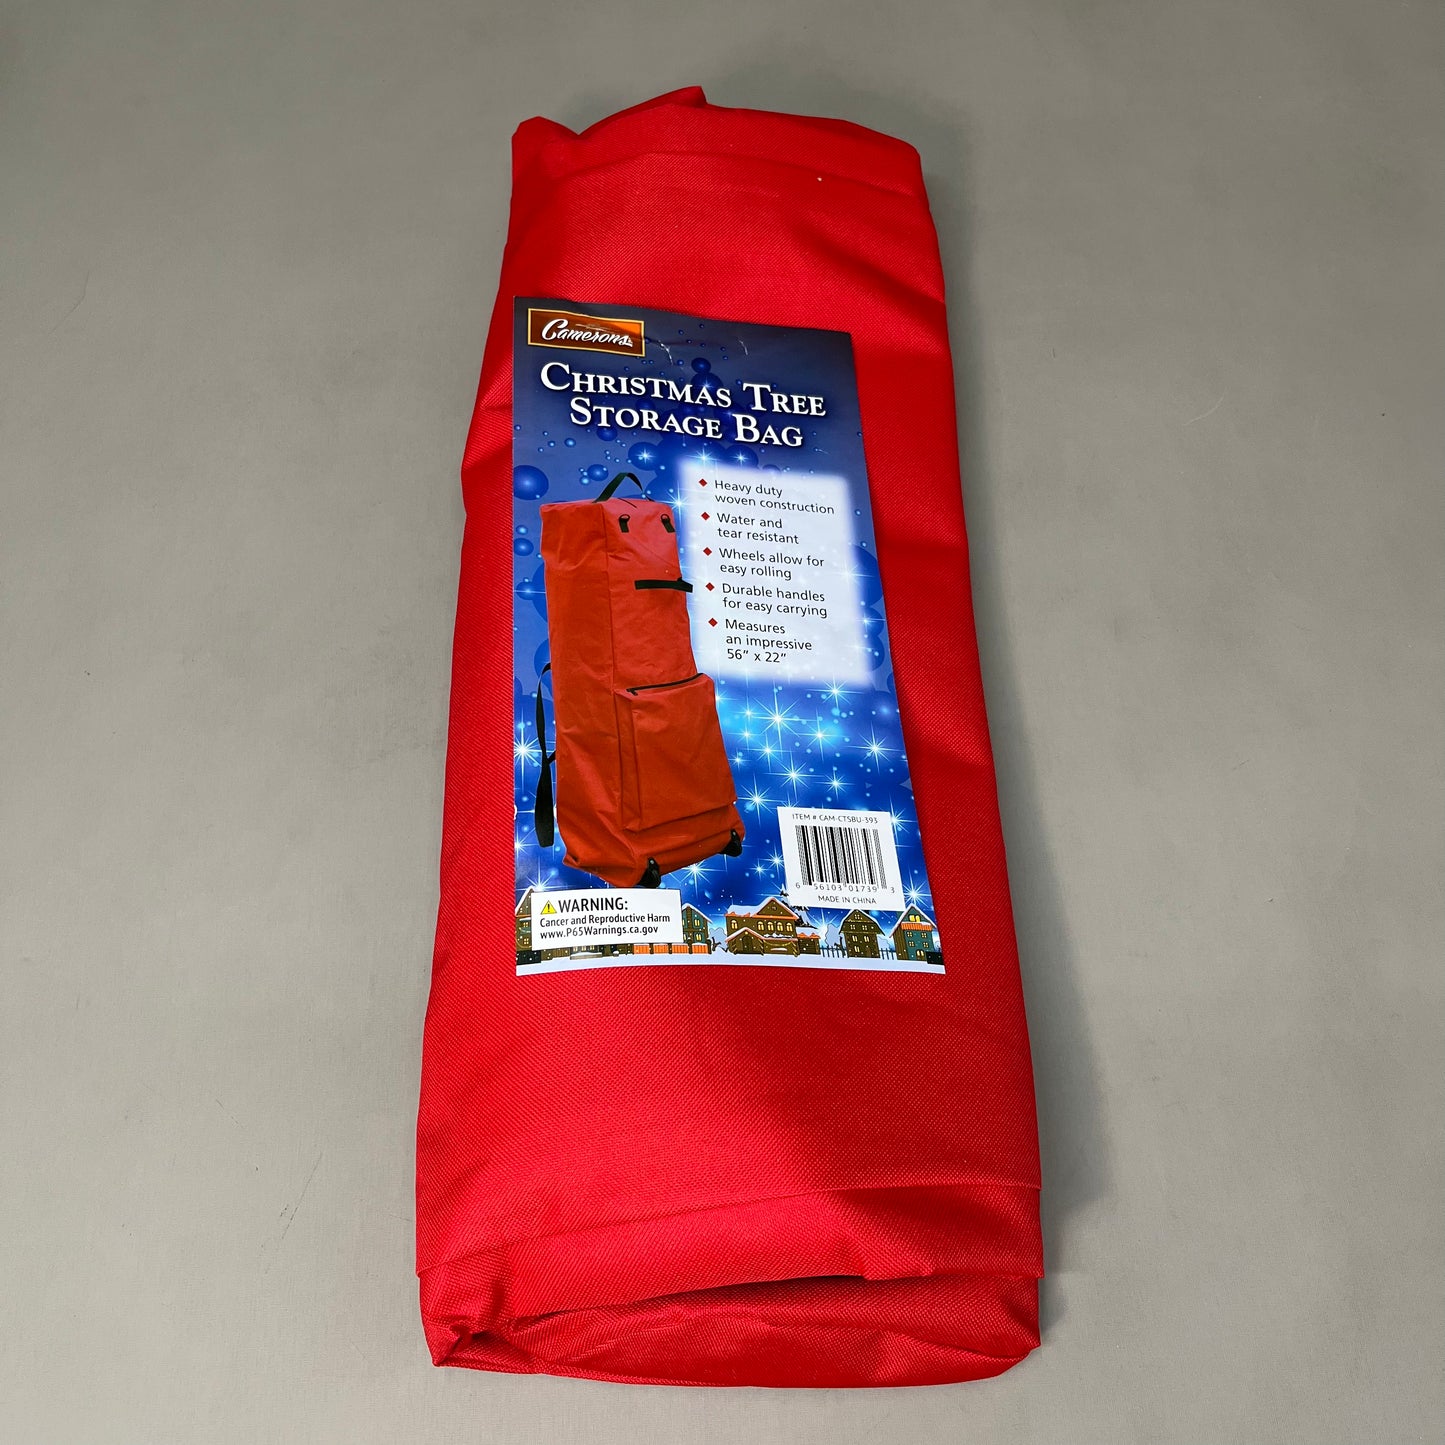 ZA@ CAMERONS Christmas Tree Storage Bag With Wheels 56" x 22" Red CAM-CTSBU-393 (New)